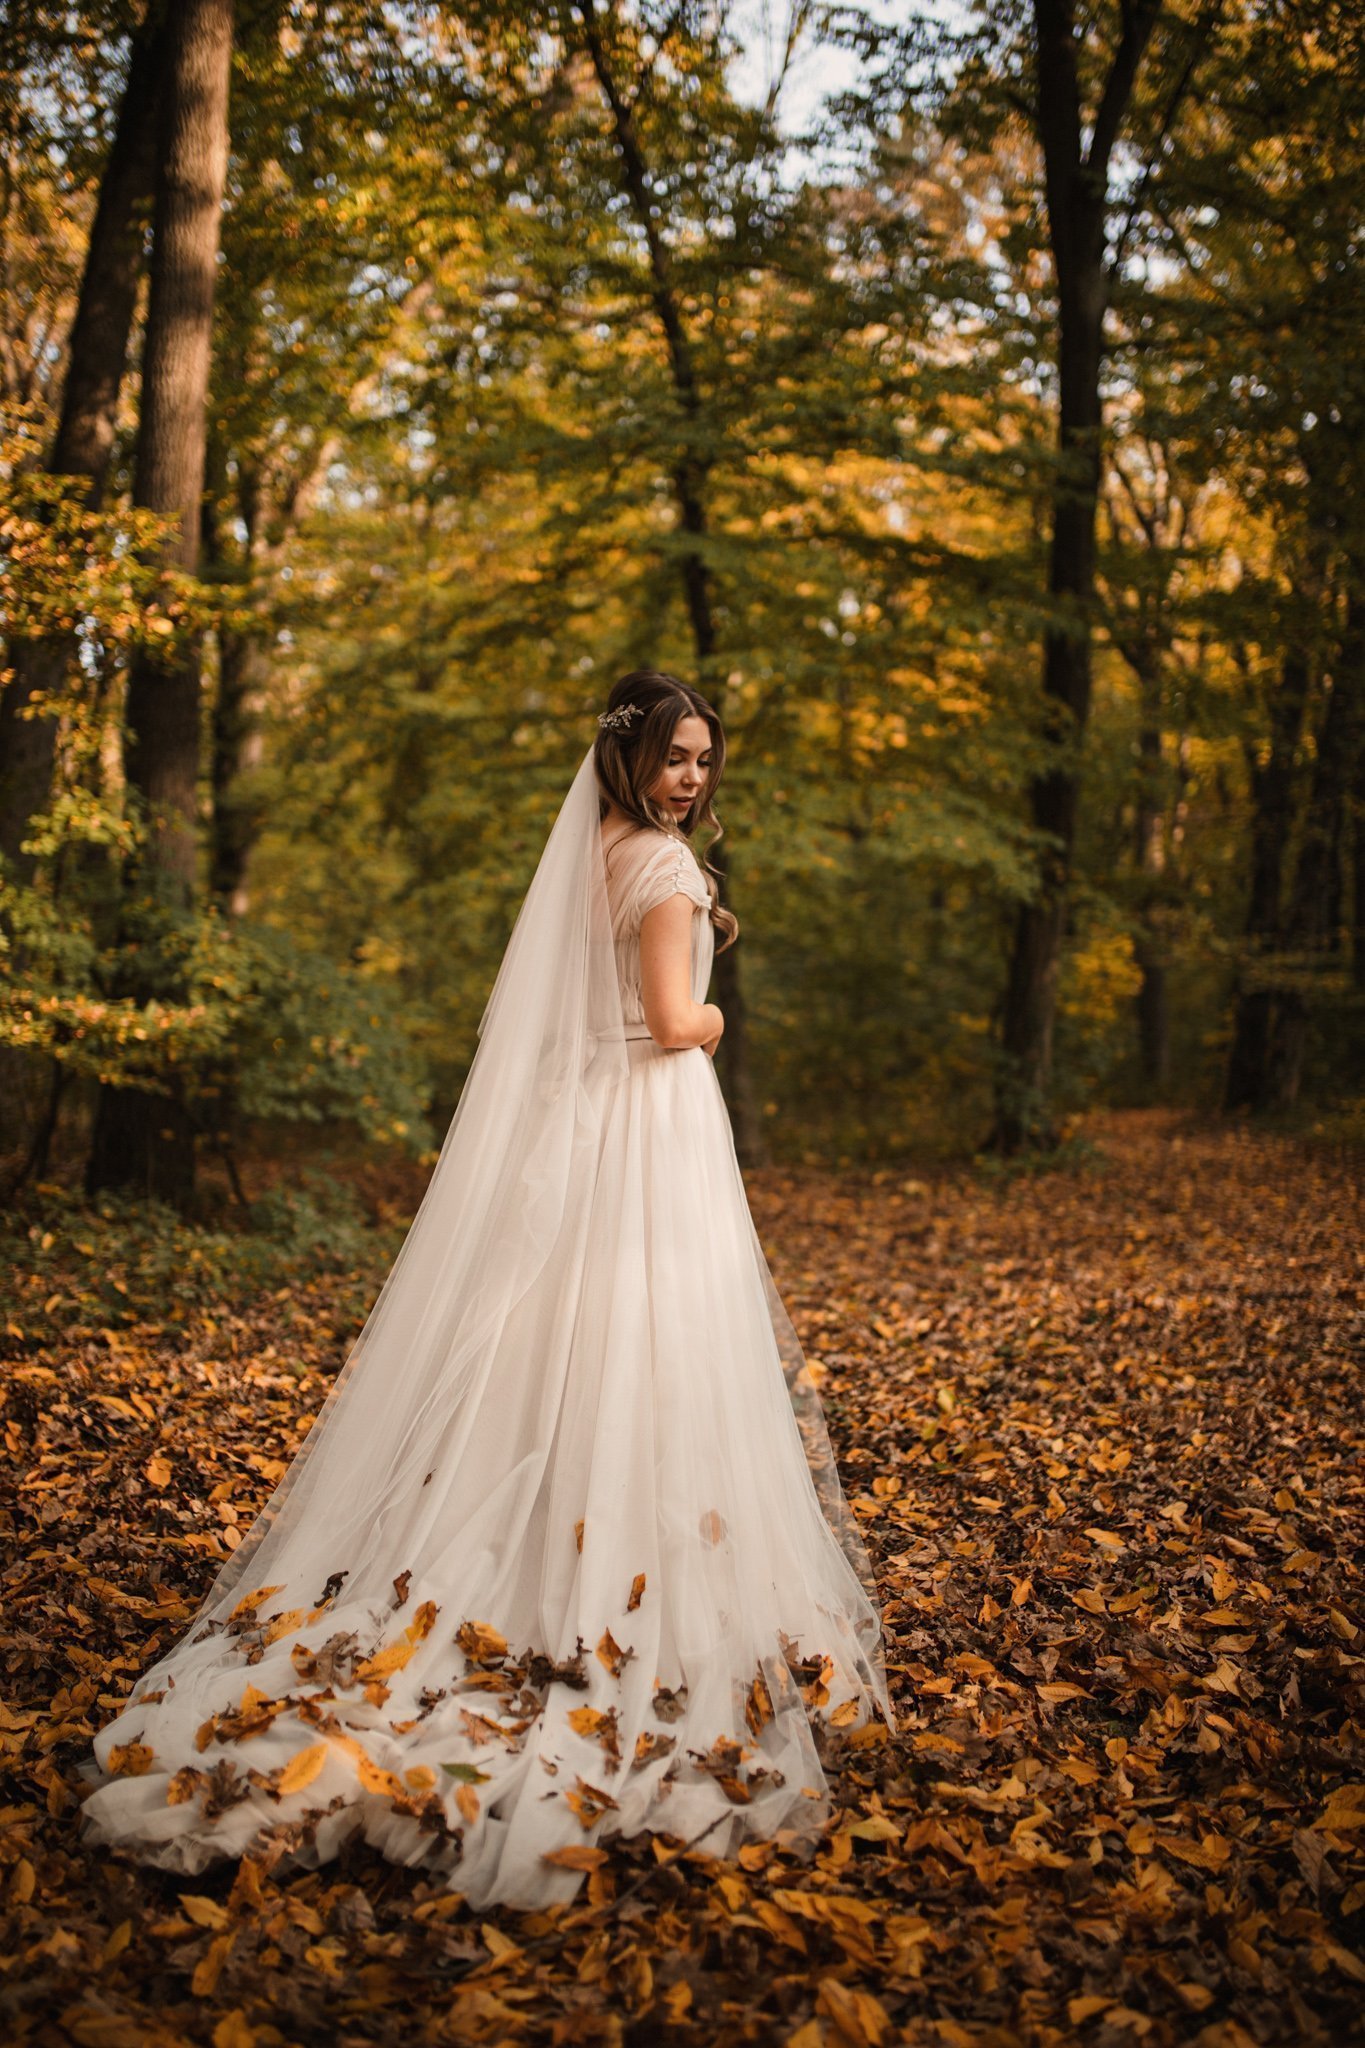 wedding photographer at greenspot wedding barn forest - bride portrait - autumn